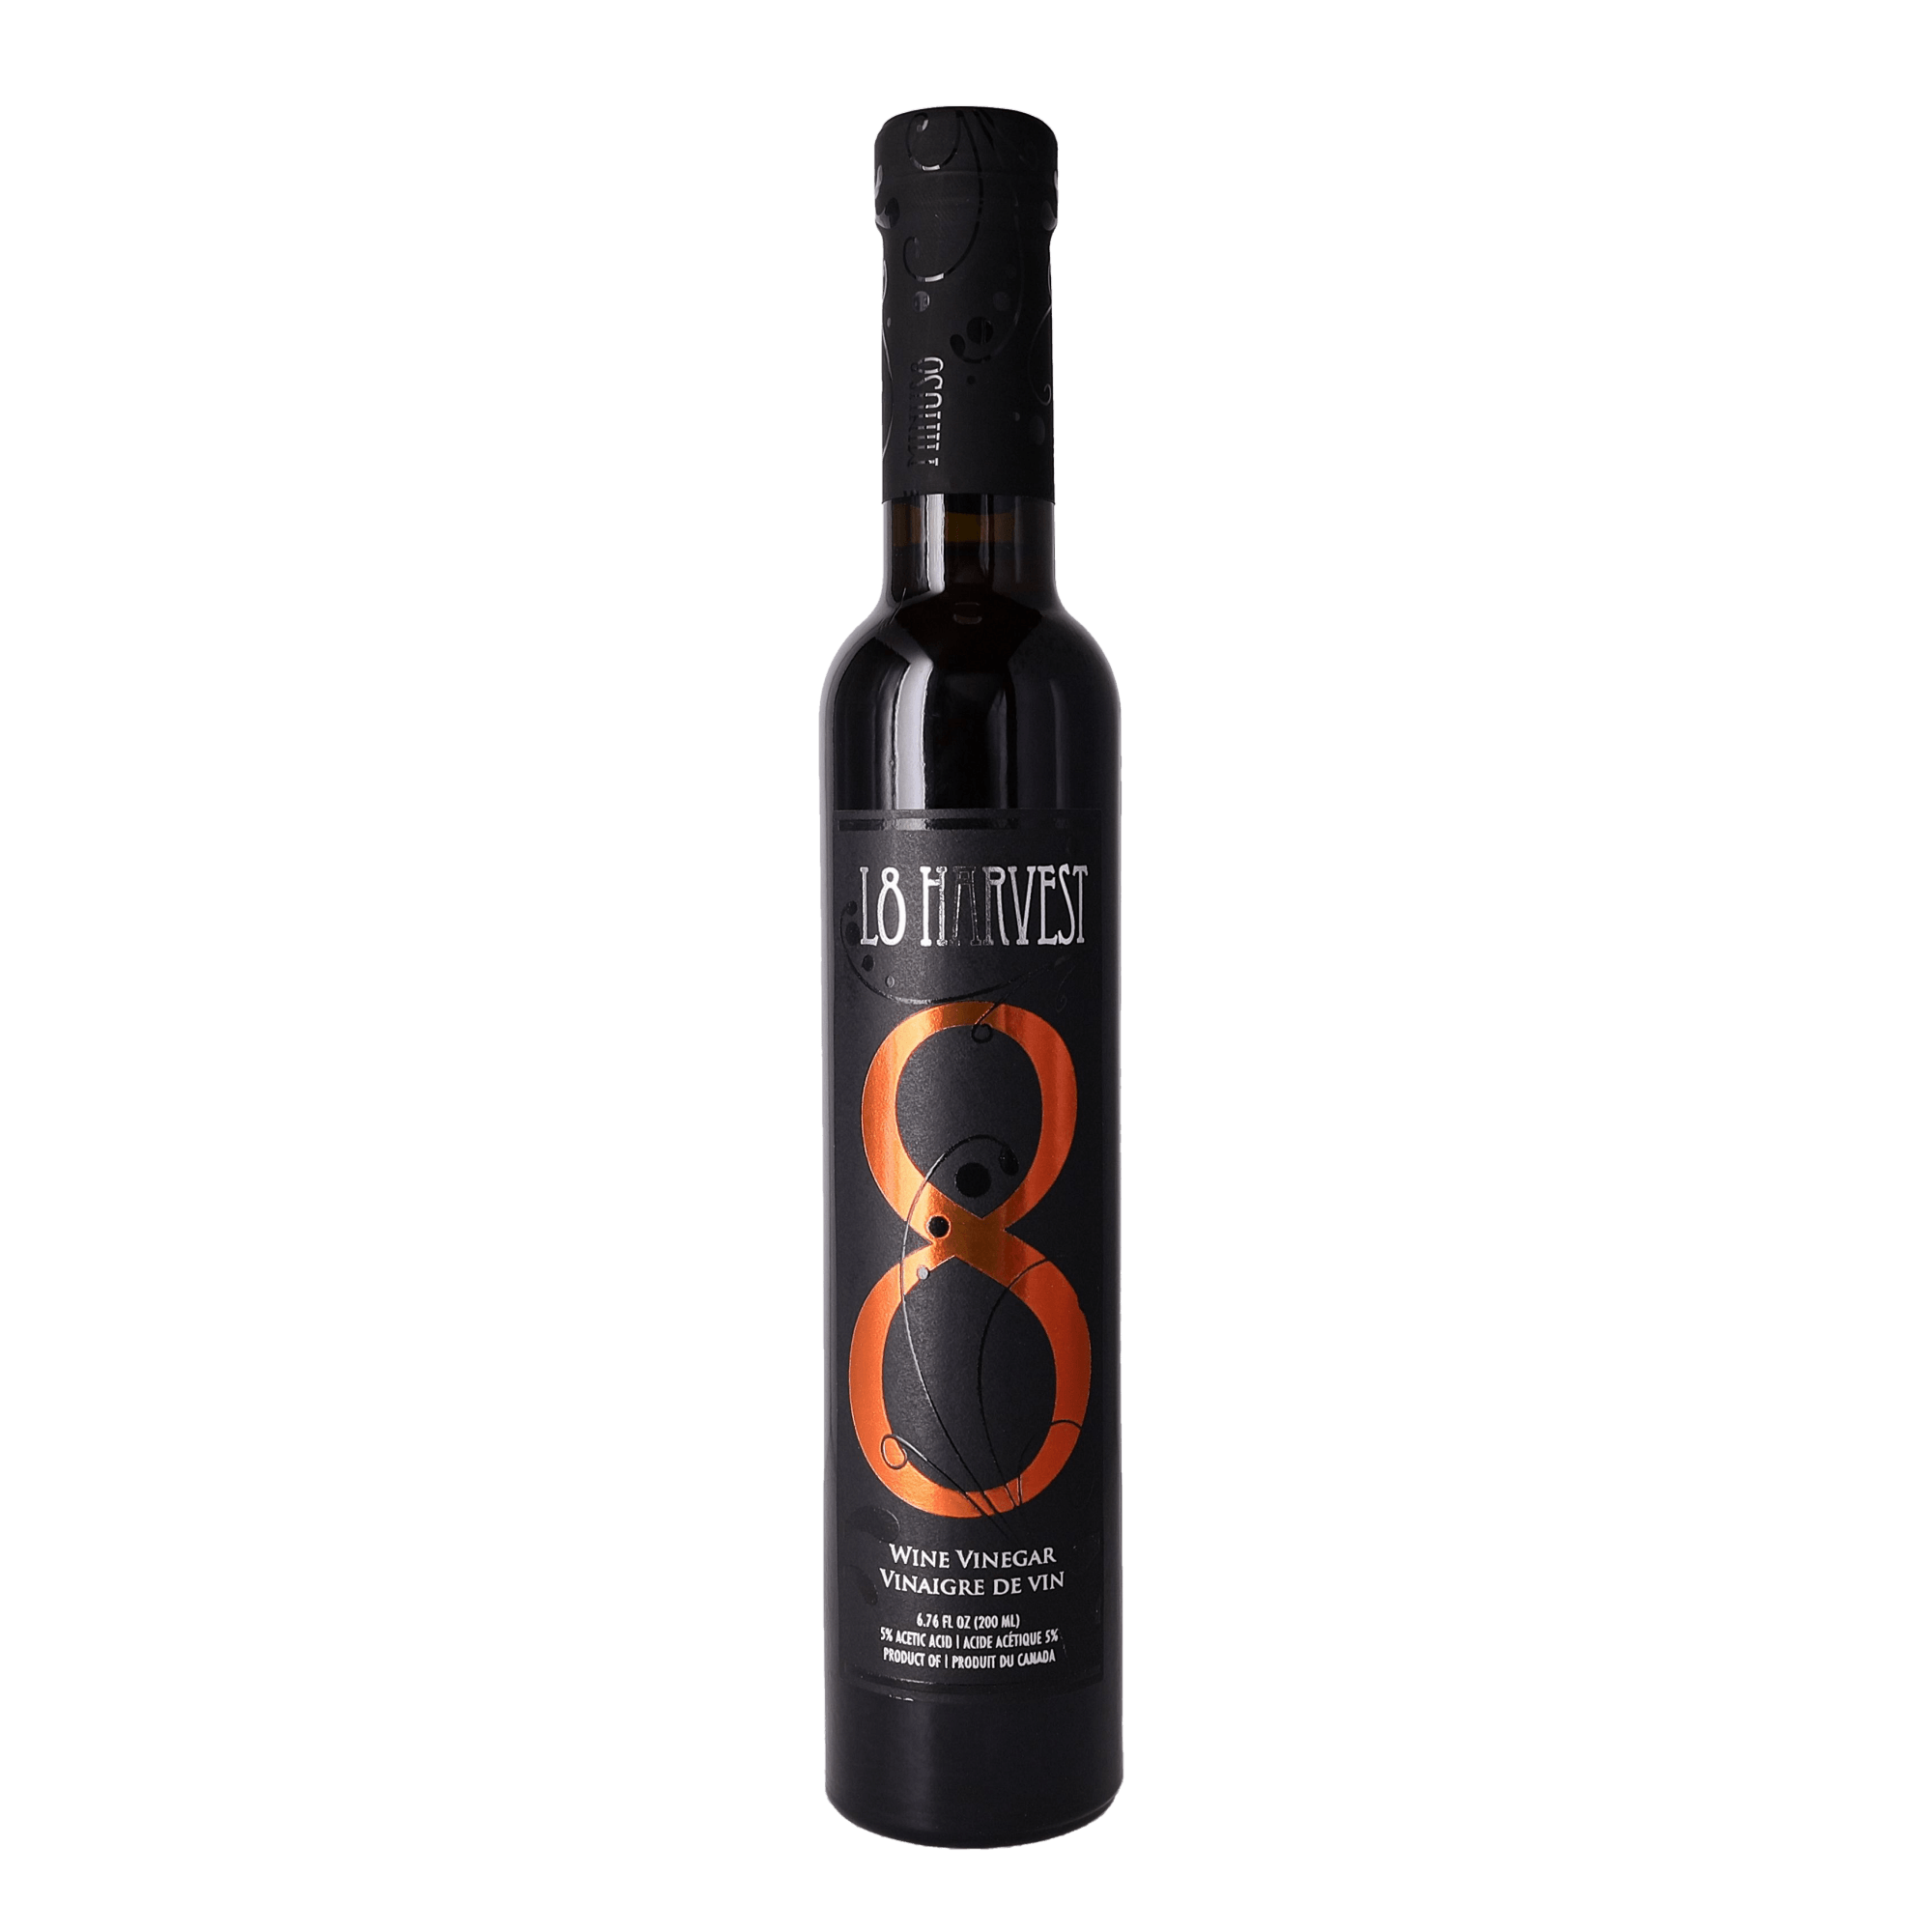 L8 Harvest Wine Vinegar - Savory Gourmet